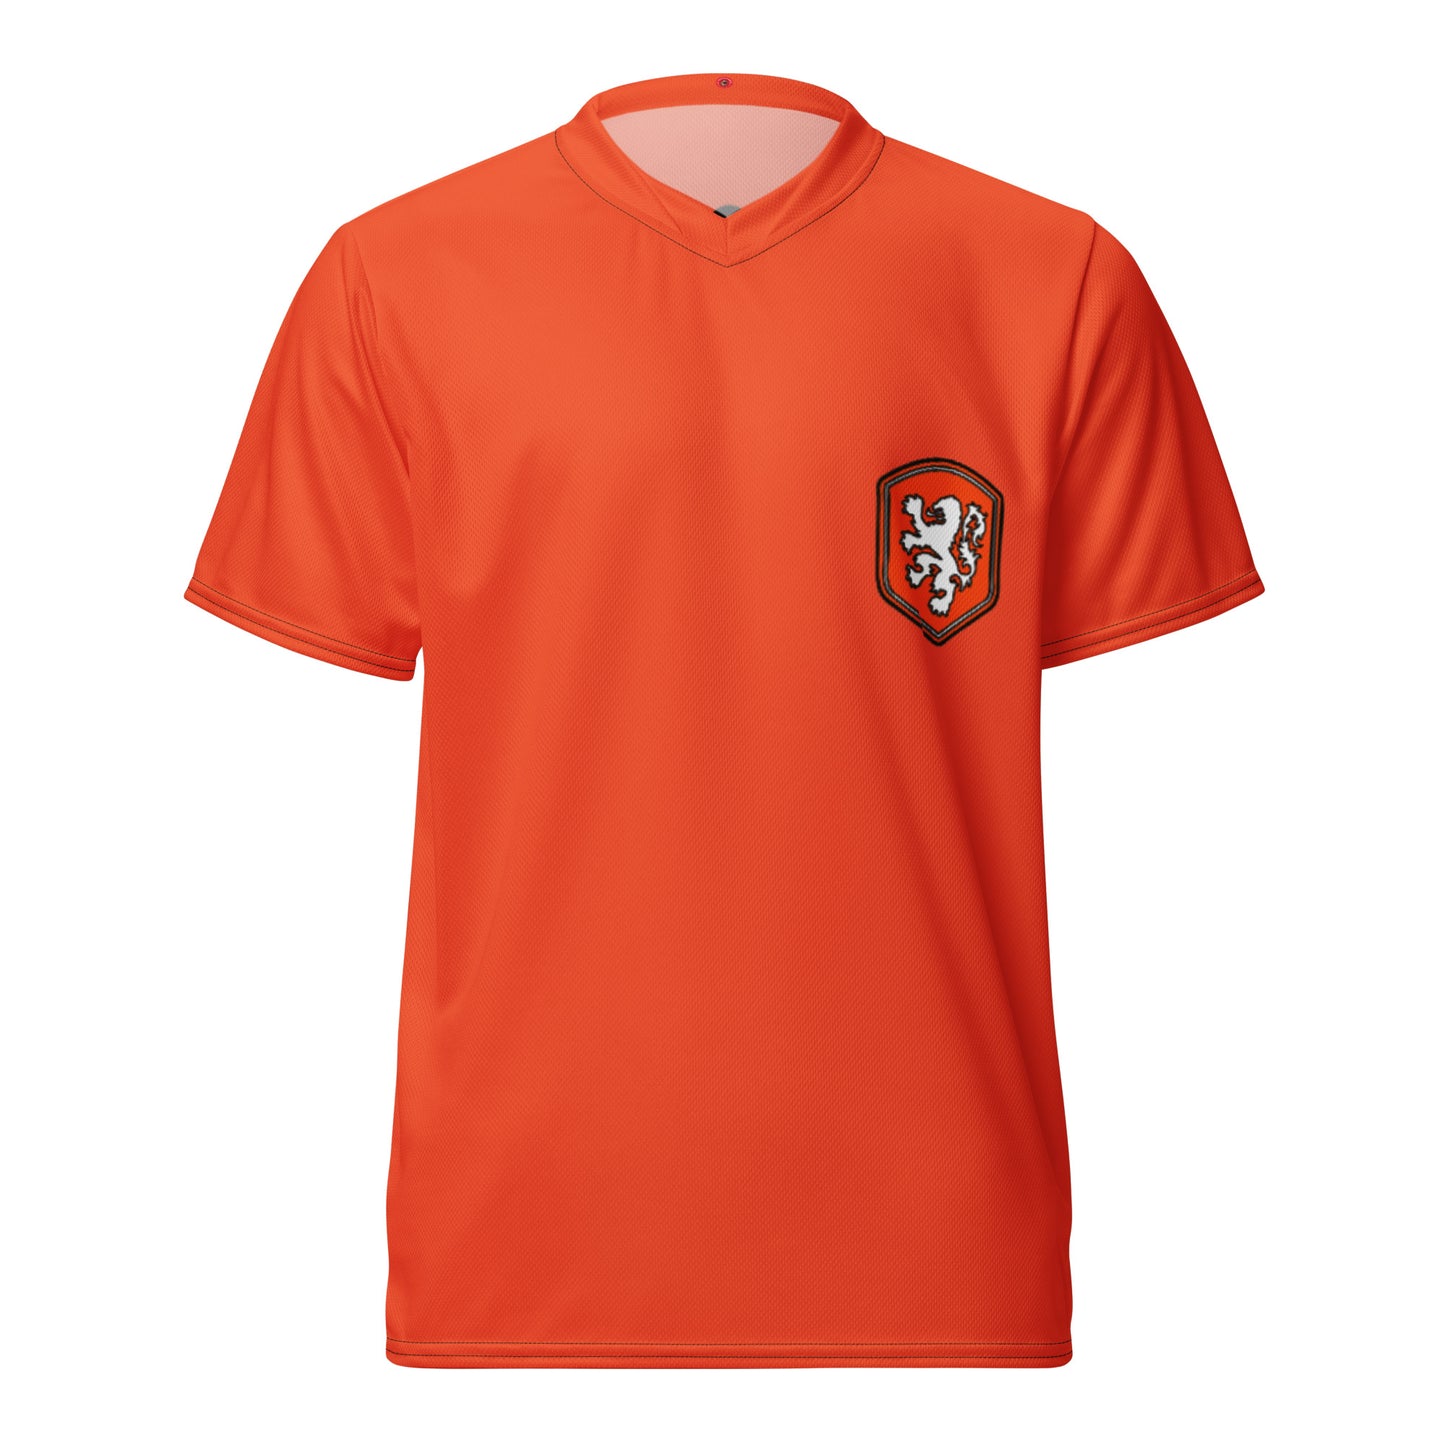 [Eigen Naam & Nummer] Voetbal Shirt Oranje